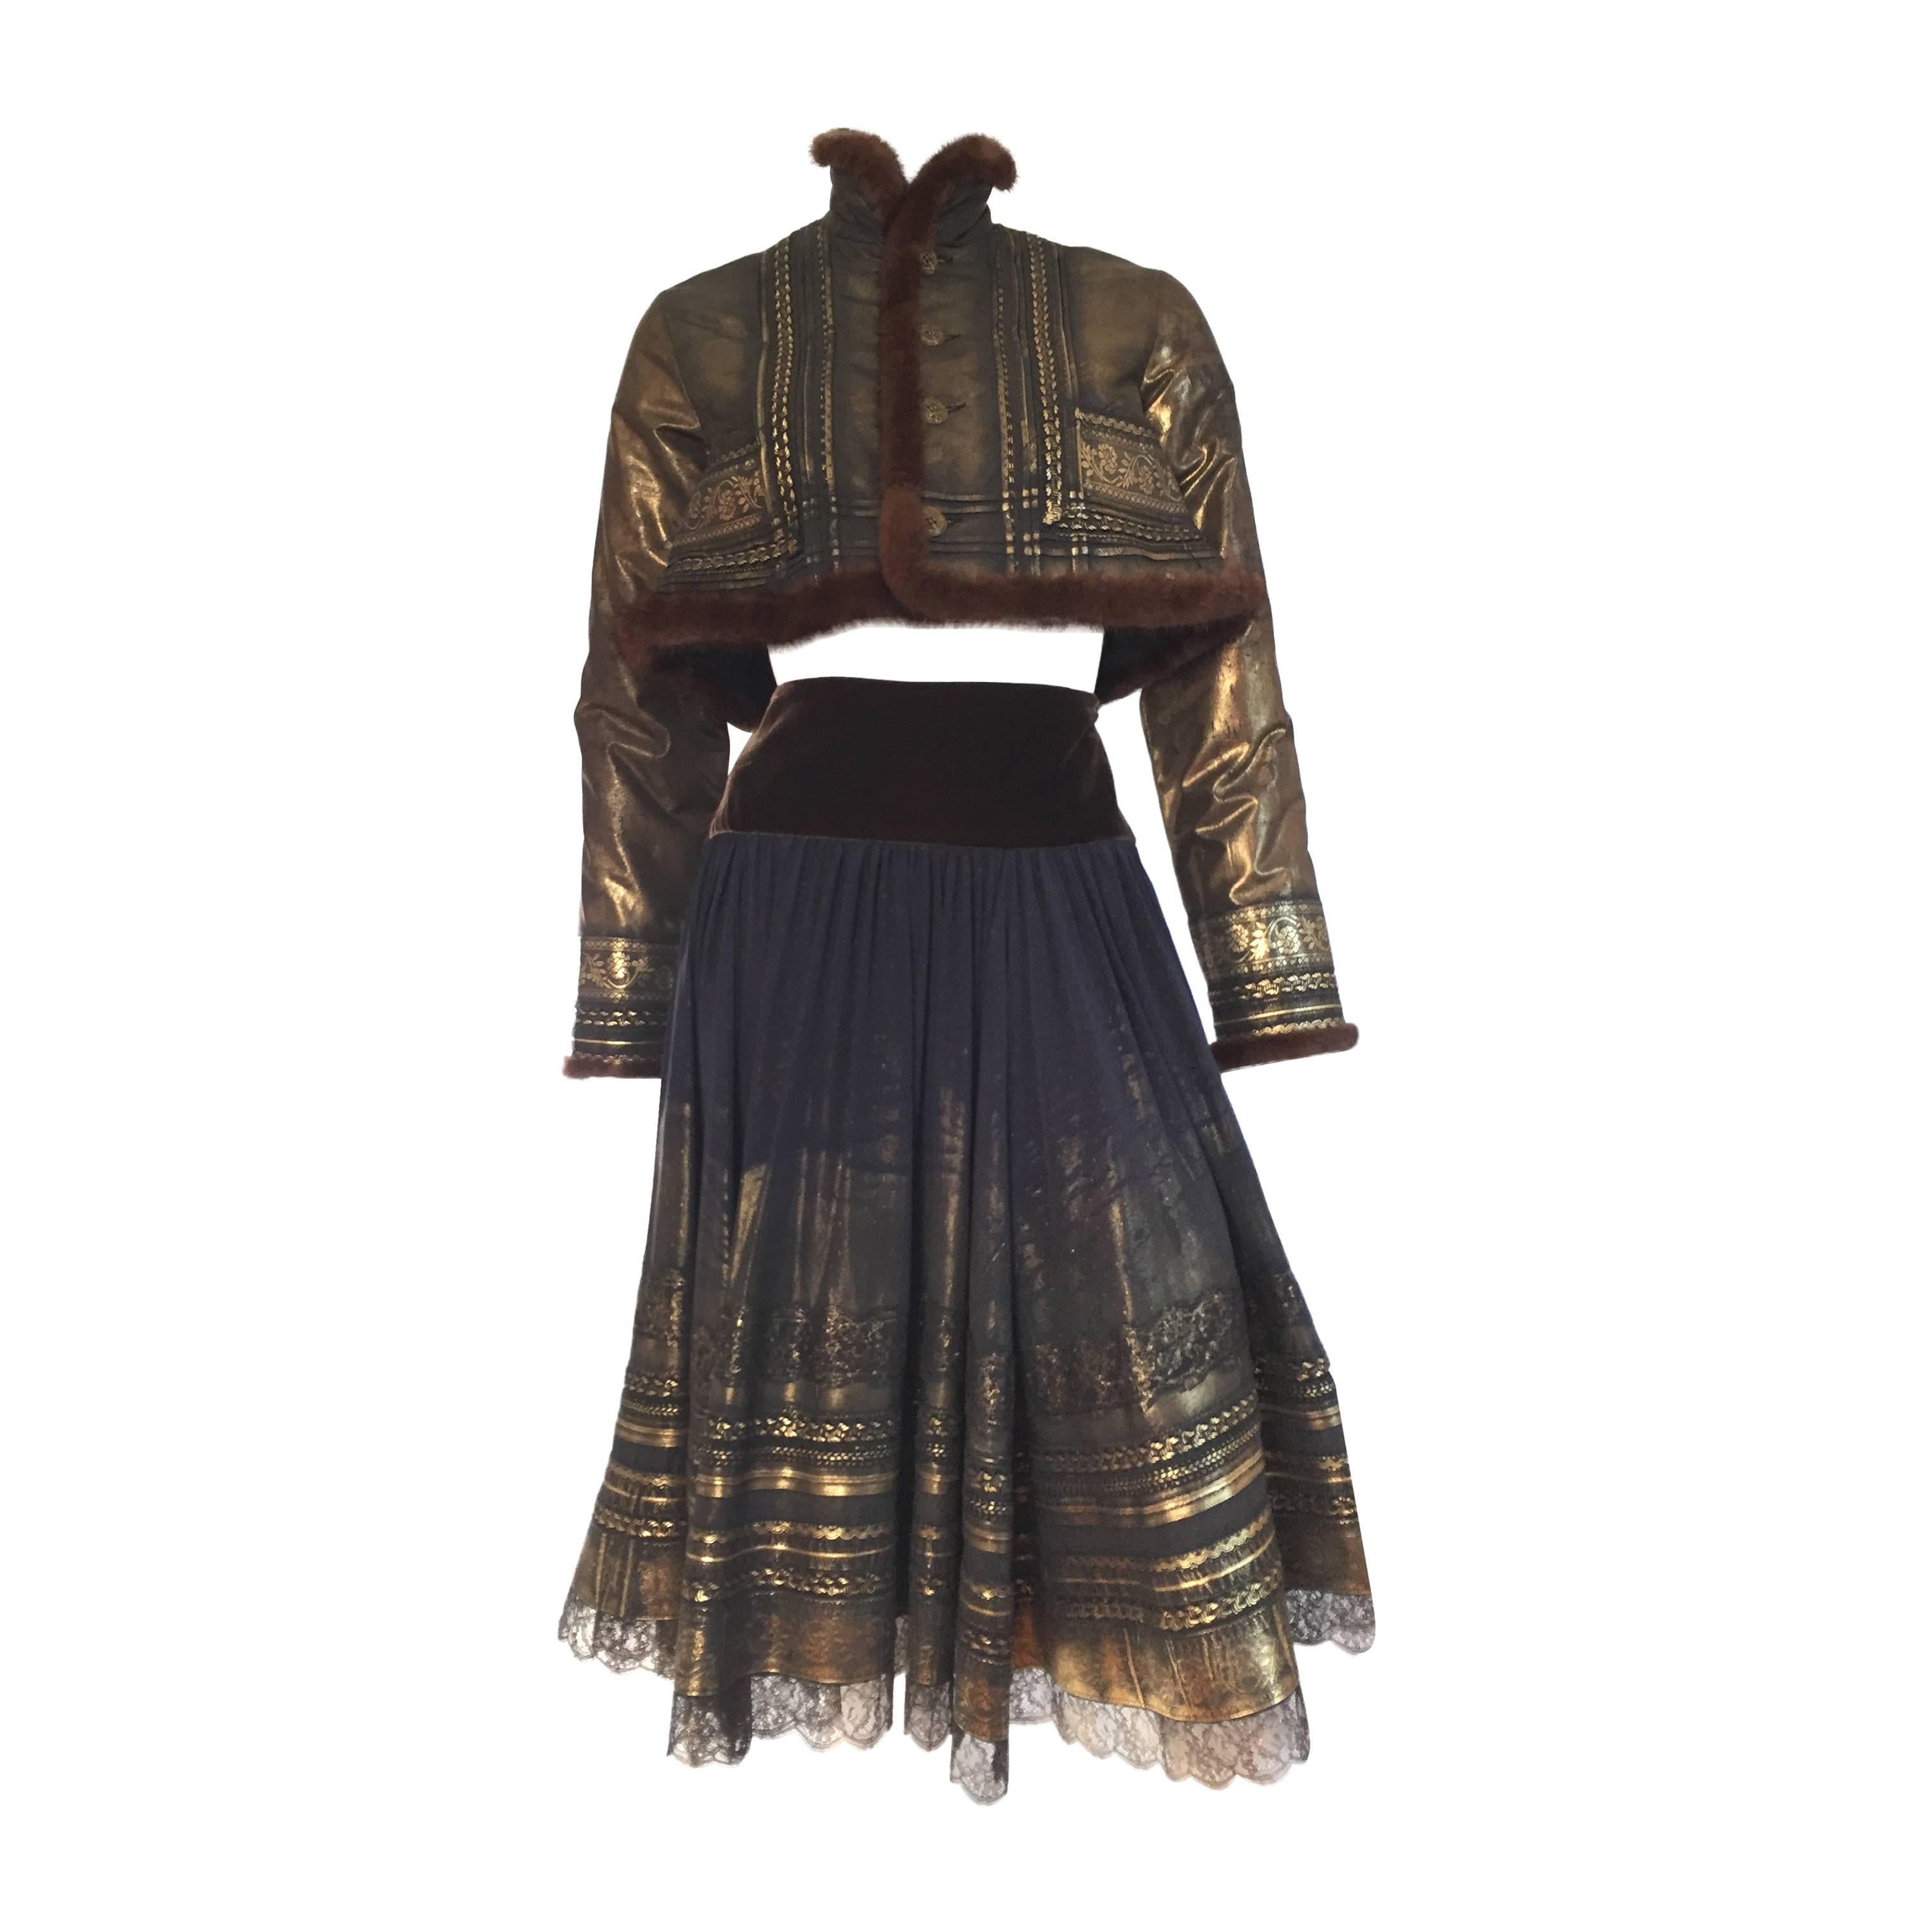 Jean Paul Gaultier Femme mink trimmed metallic coat & skirt.